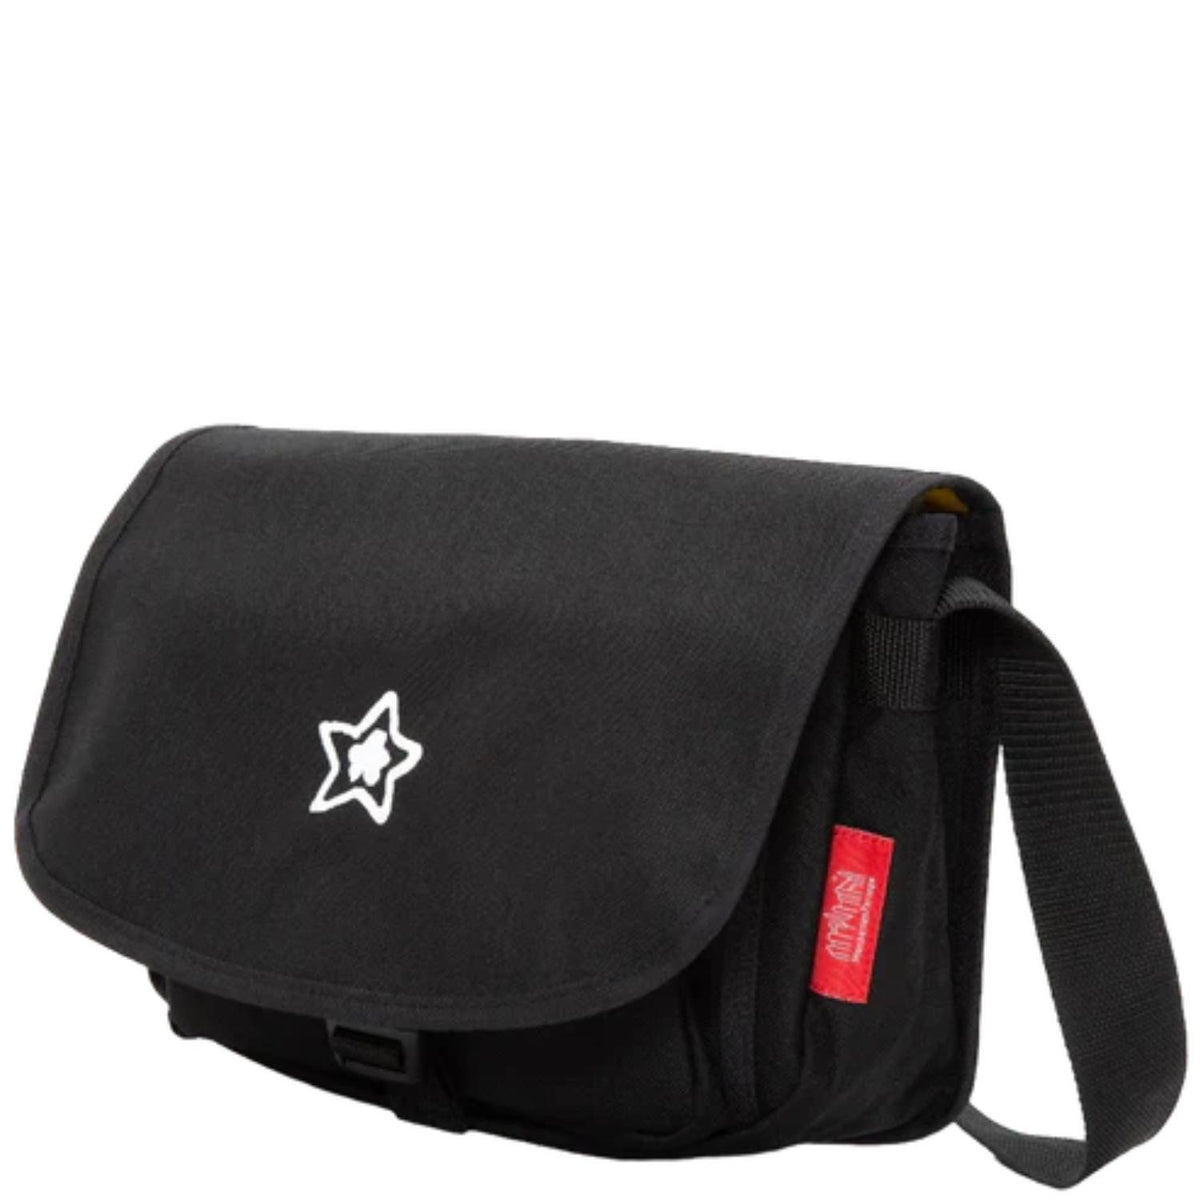 Star Team X Manhattan Portage Messenger Bag